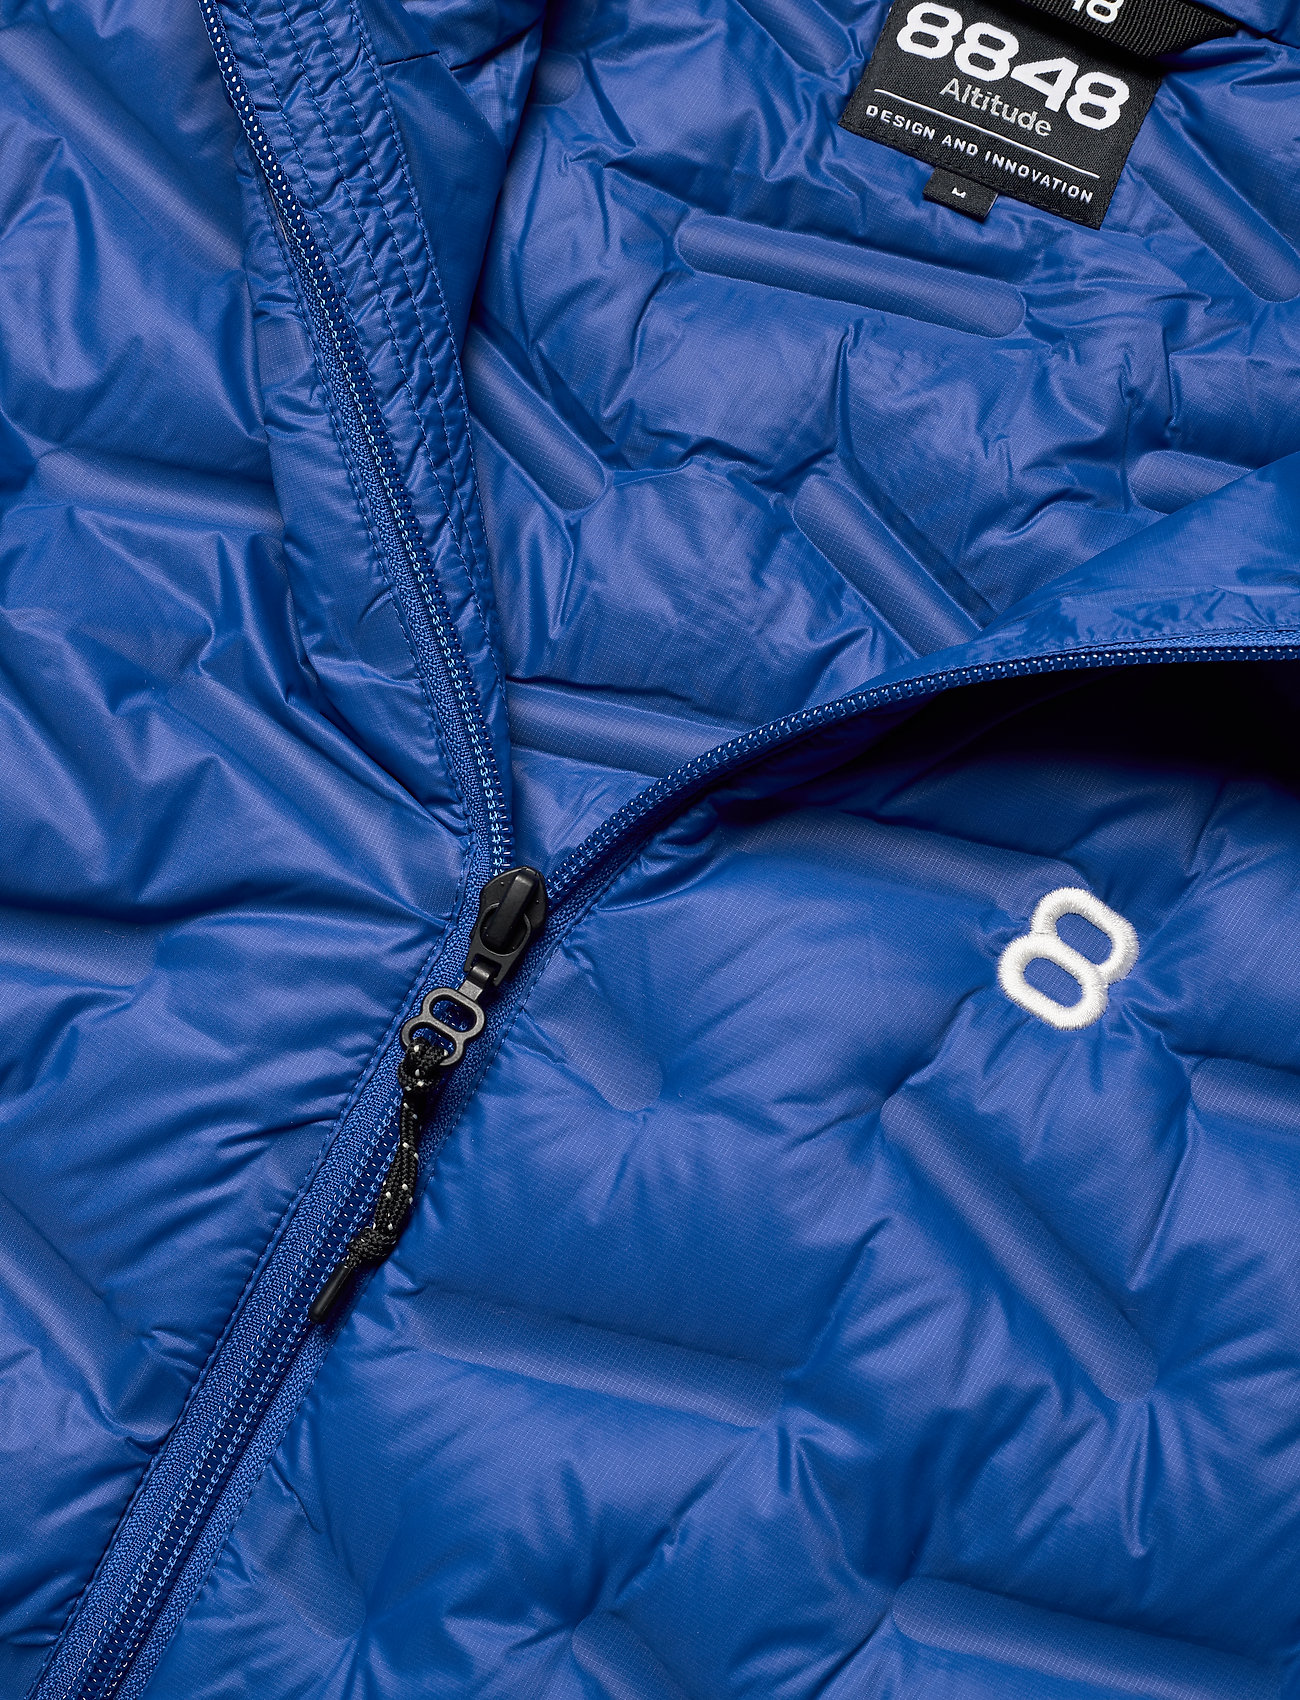 Transform Jacket (Blue) (125.97 €) - 8848 Altitude - | Boozt.com